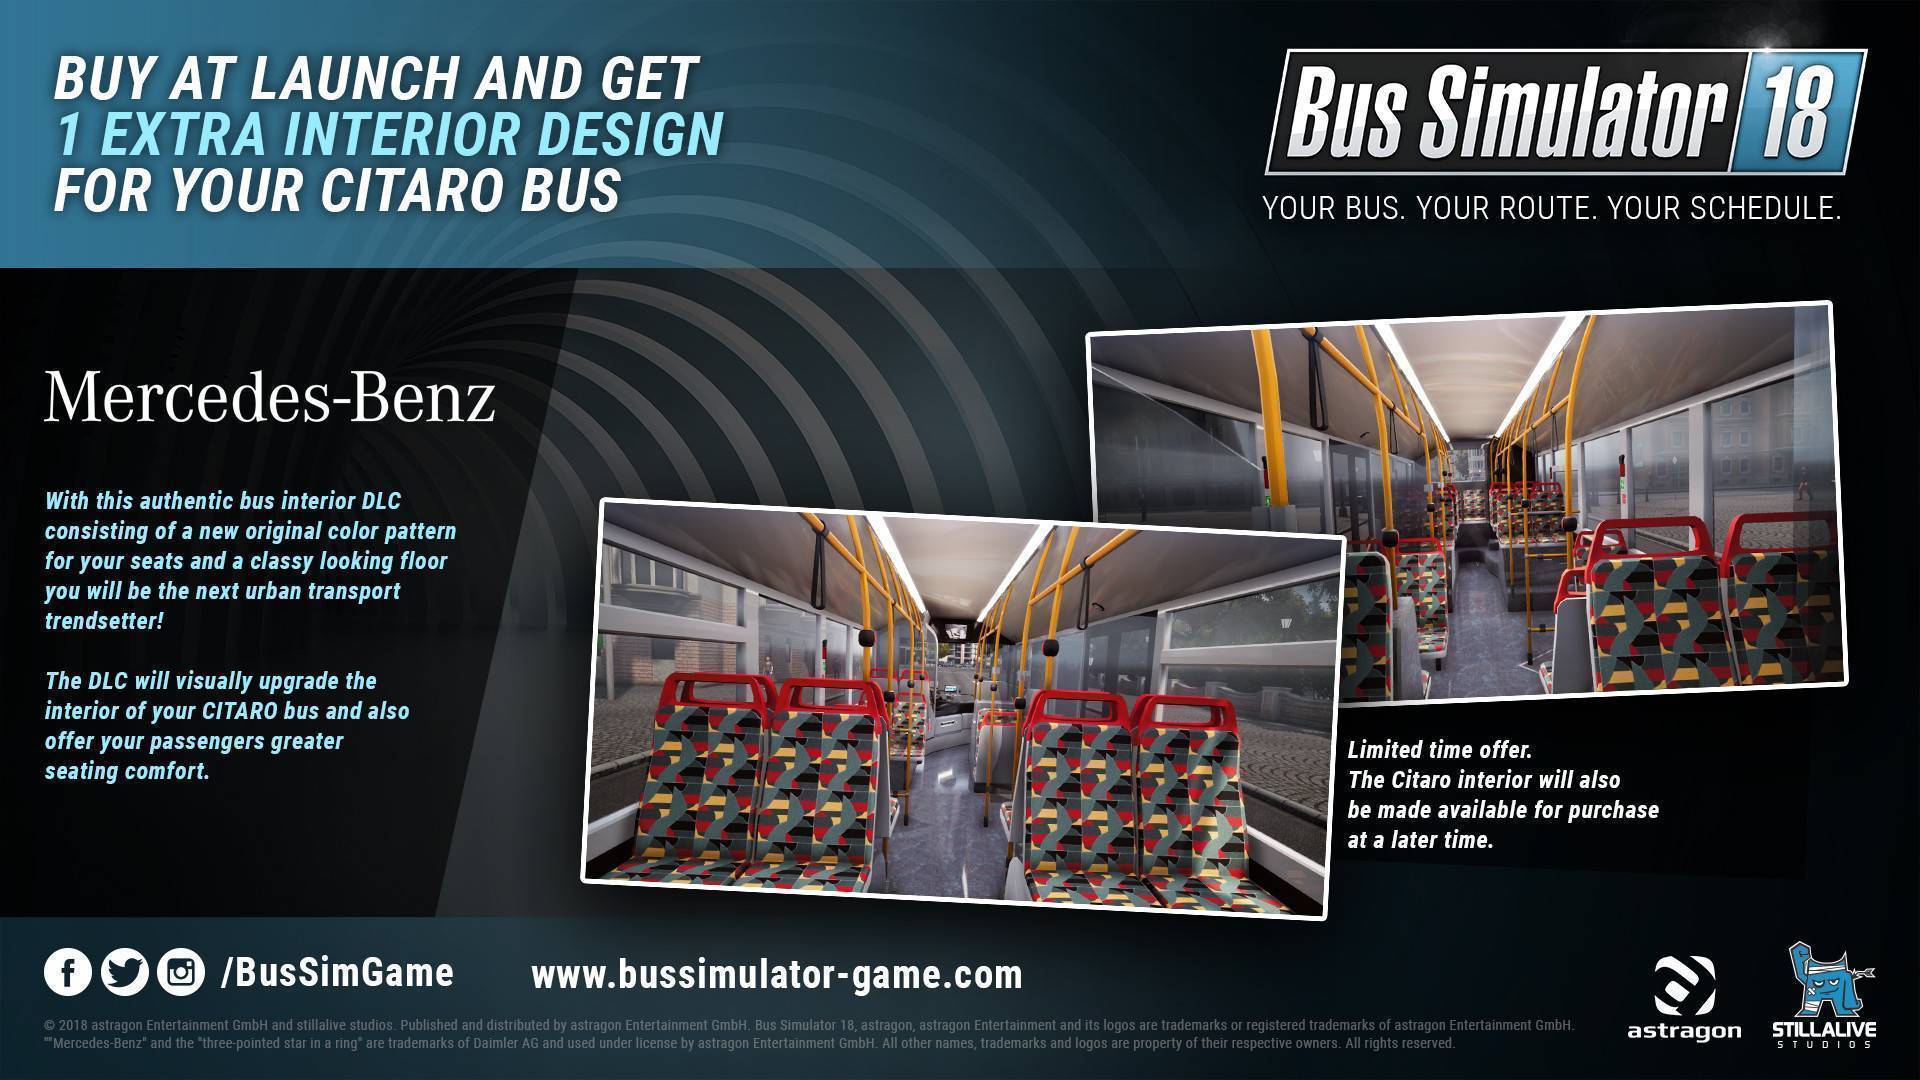 license key for bus simulator 18